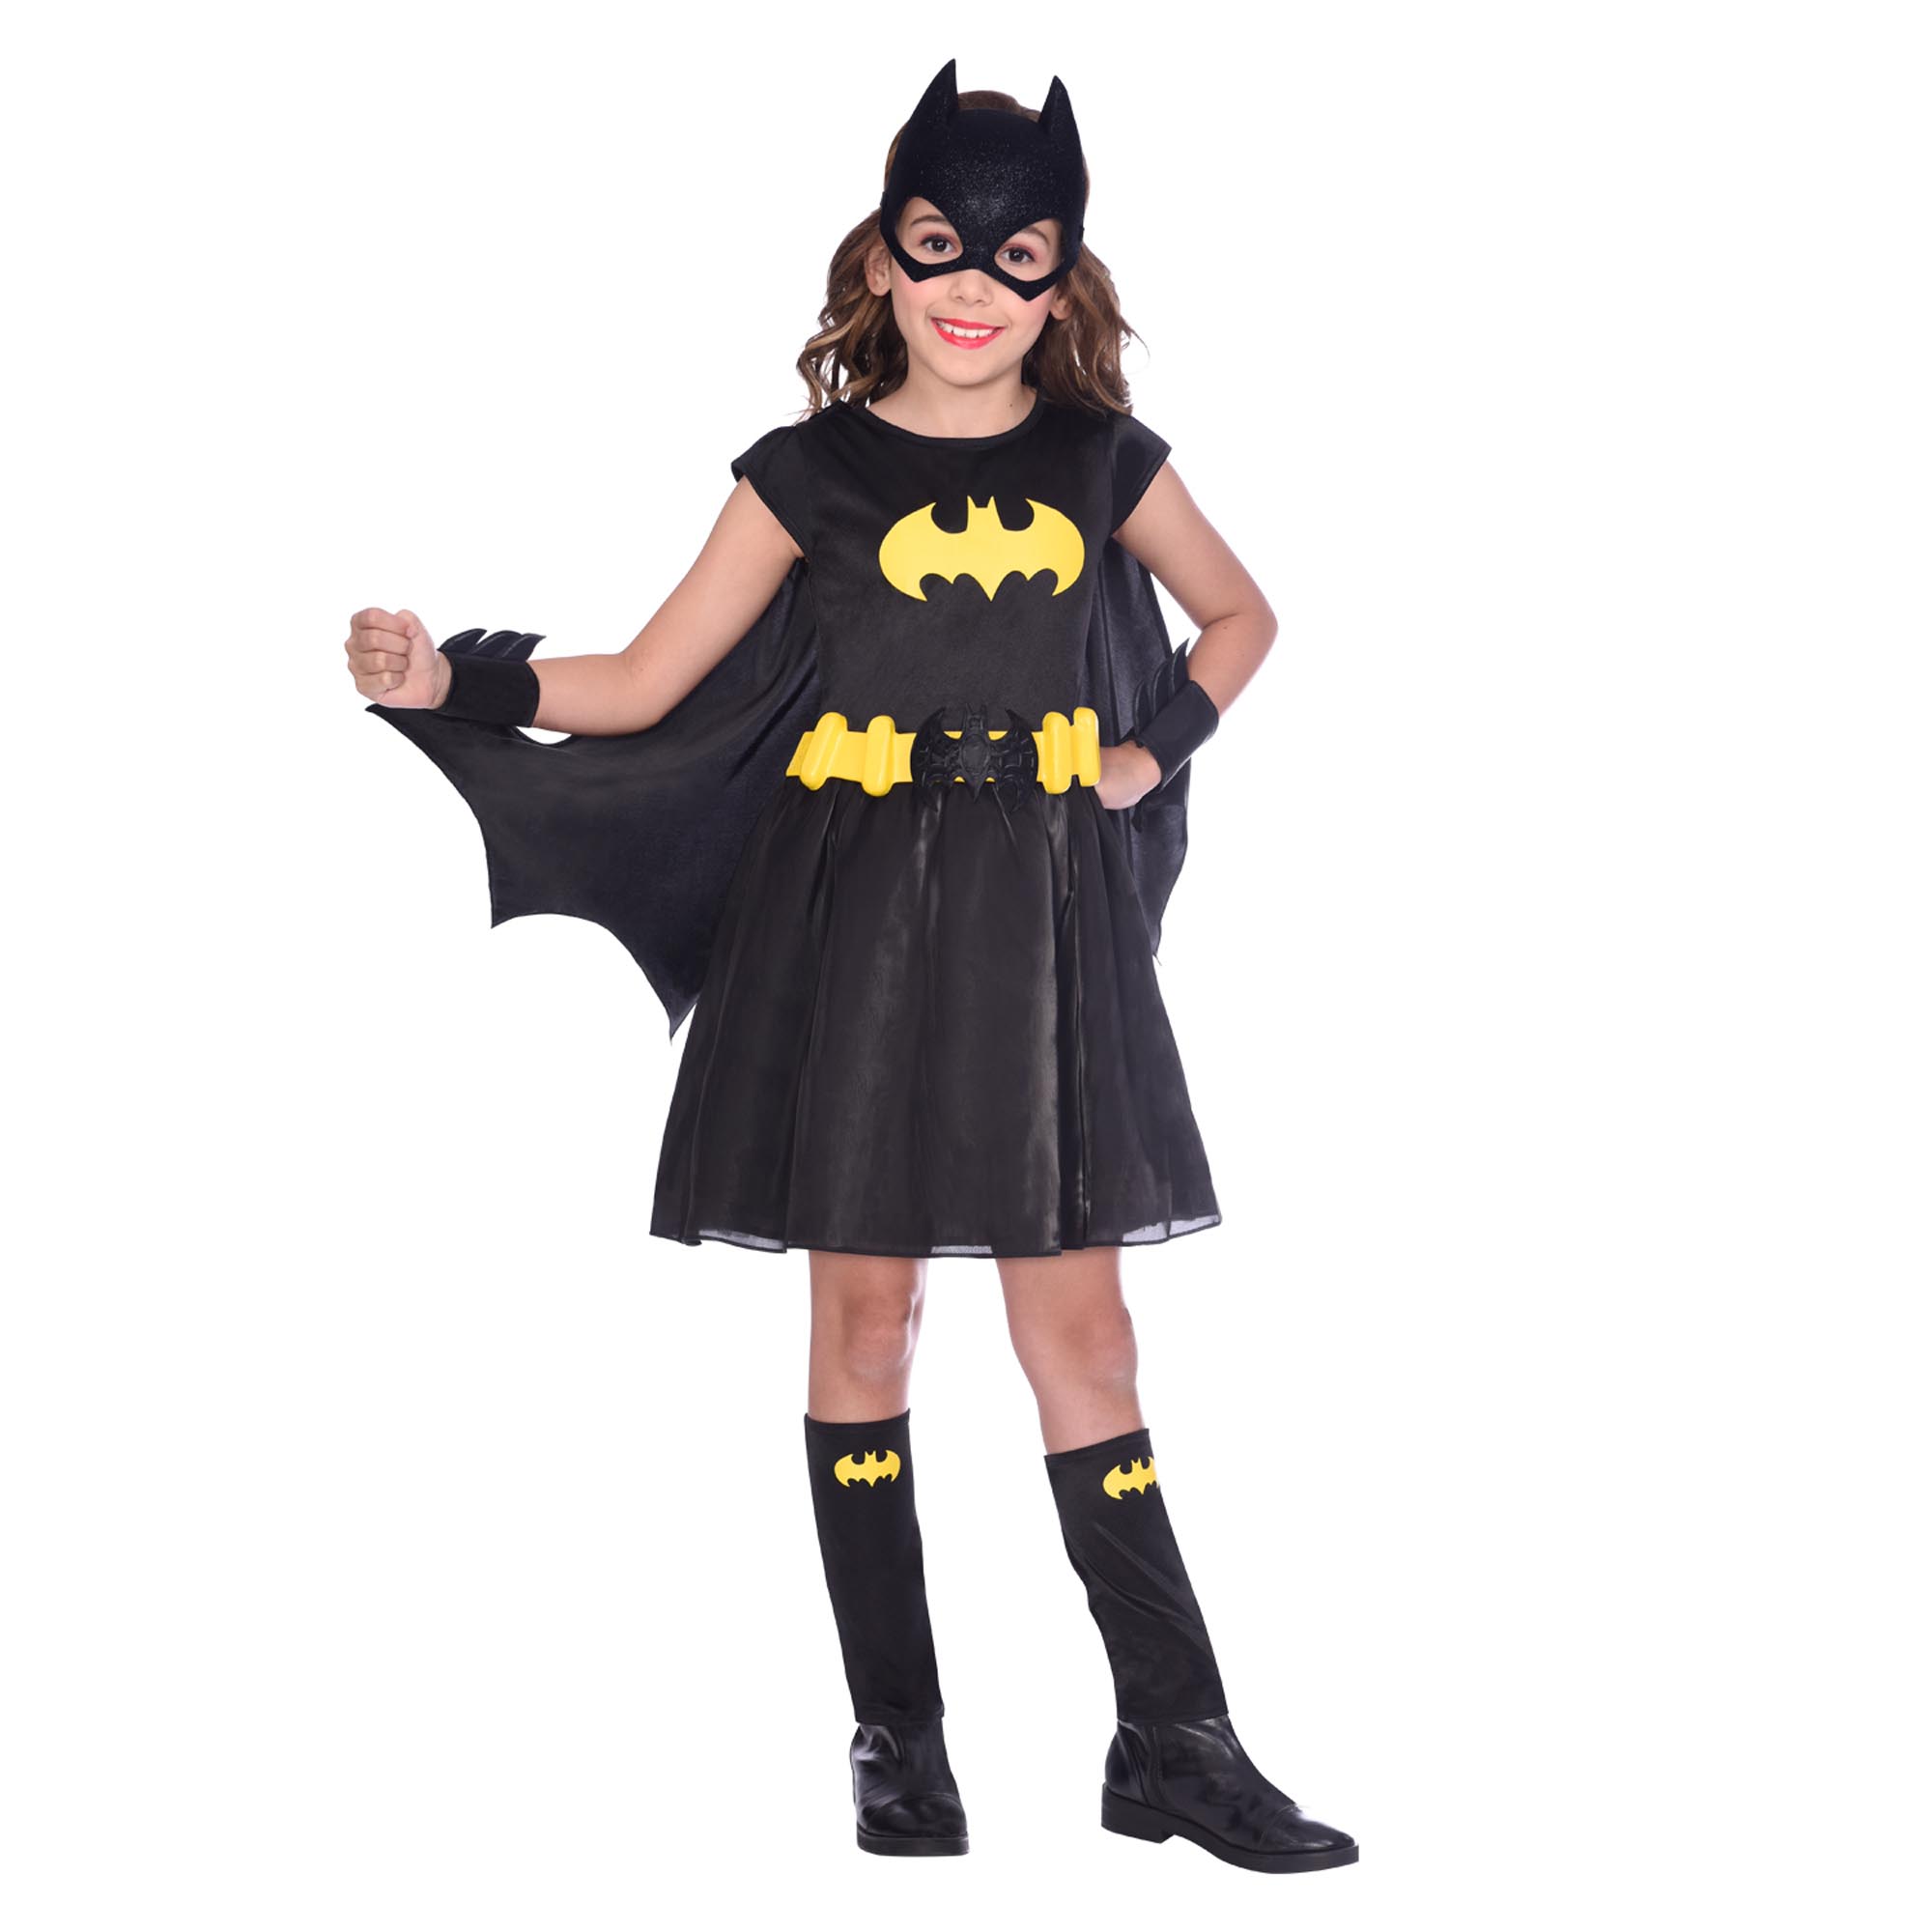 Official Batgirl Classic Children's Fancy Dress Costume